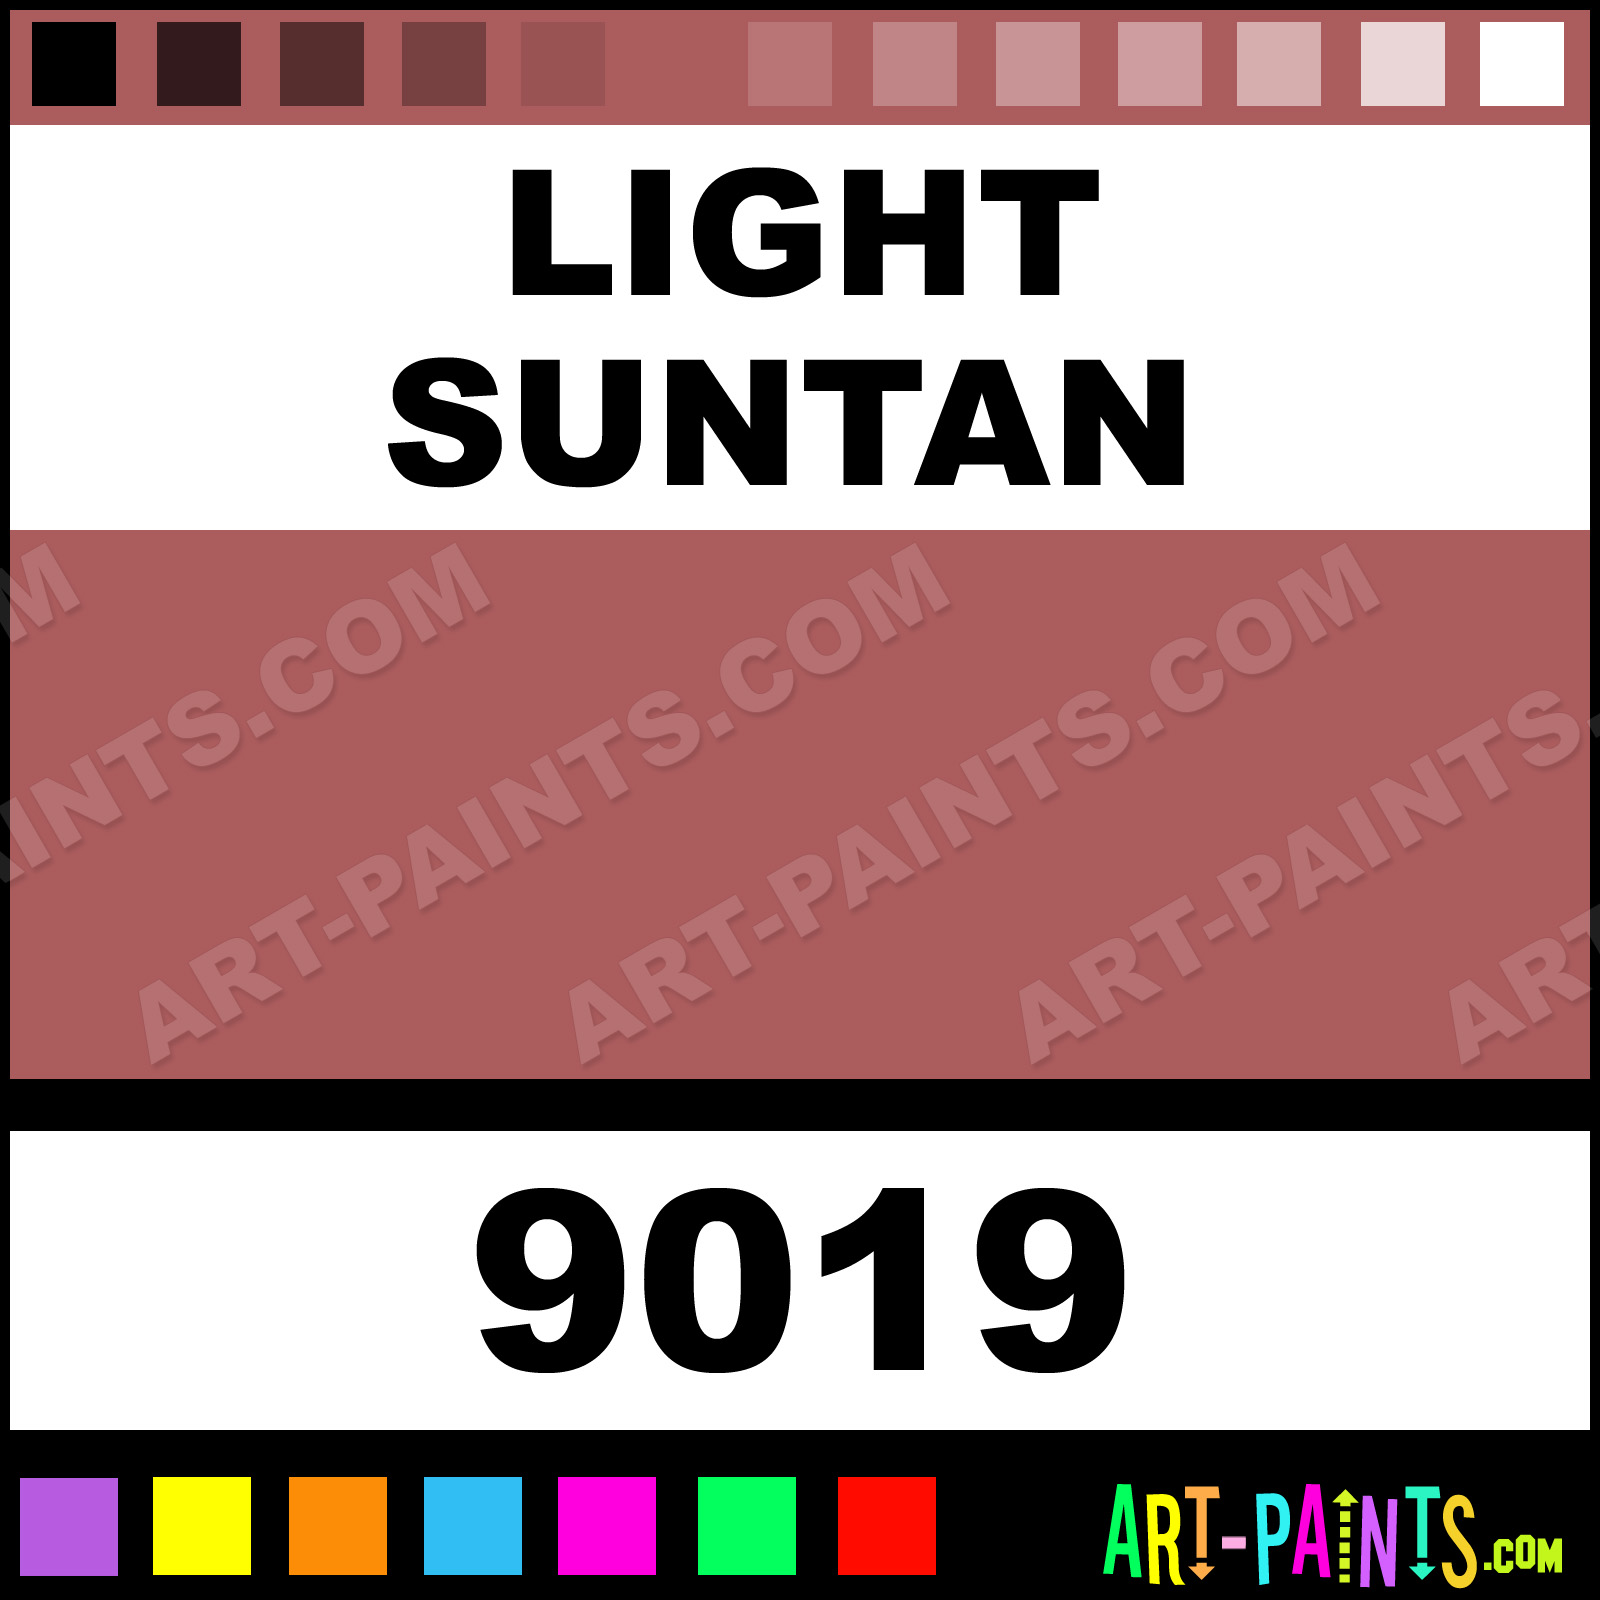 Light Suntan Tattoo Colors Tattoo Ink Paints - 9019 - Light Suntan